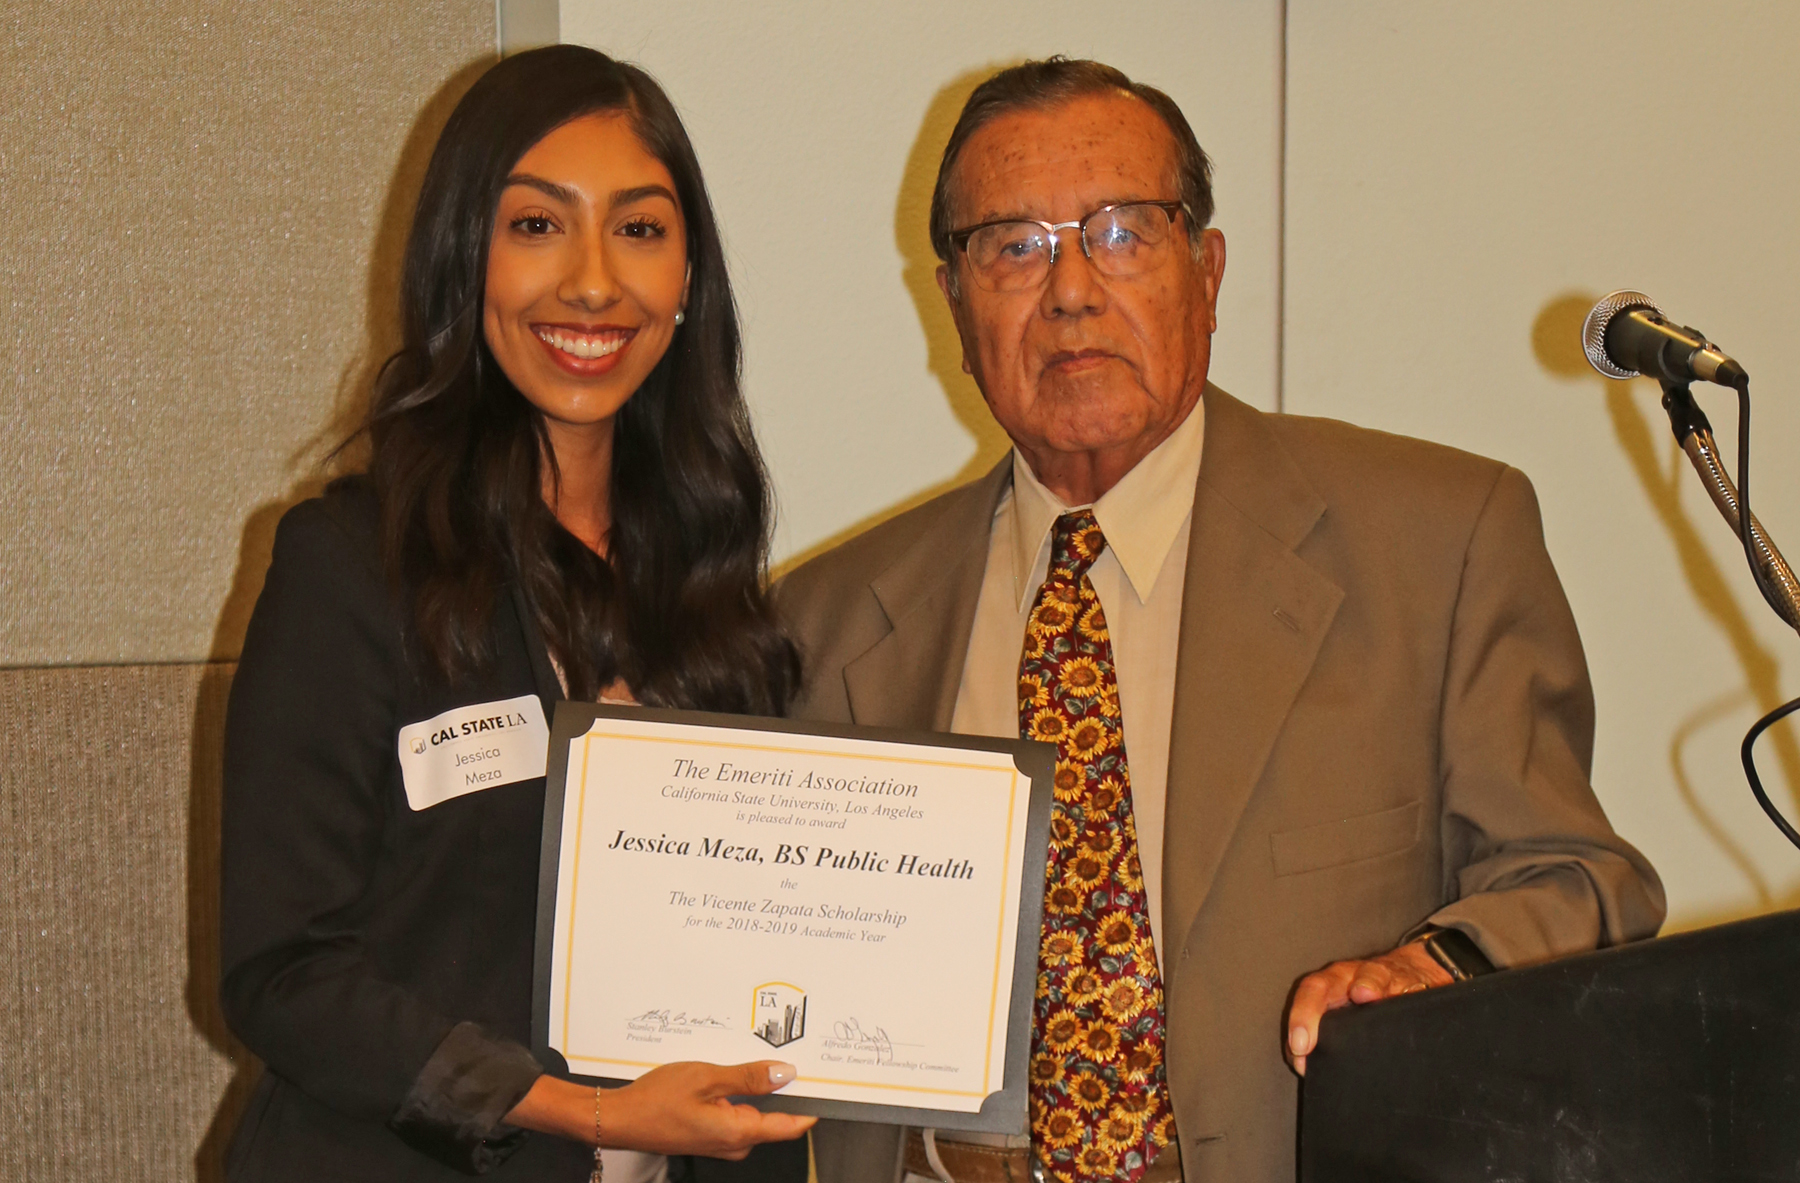 Jessica Meza, student, with professor presenting award